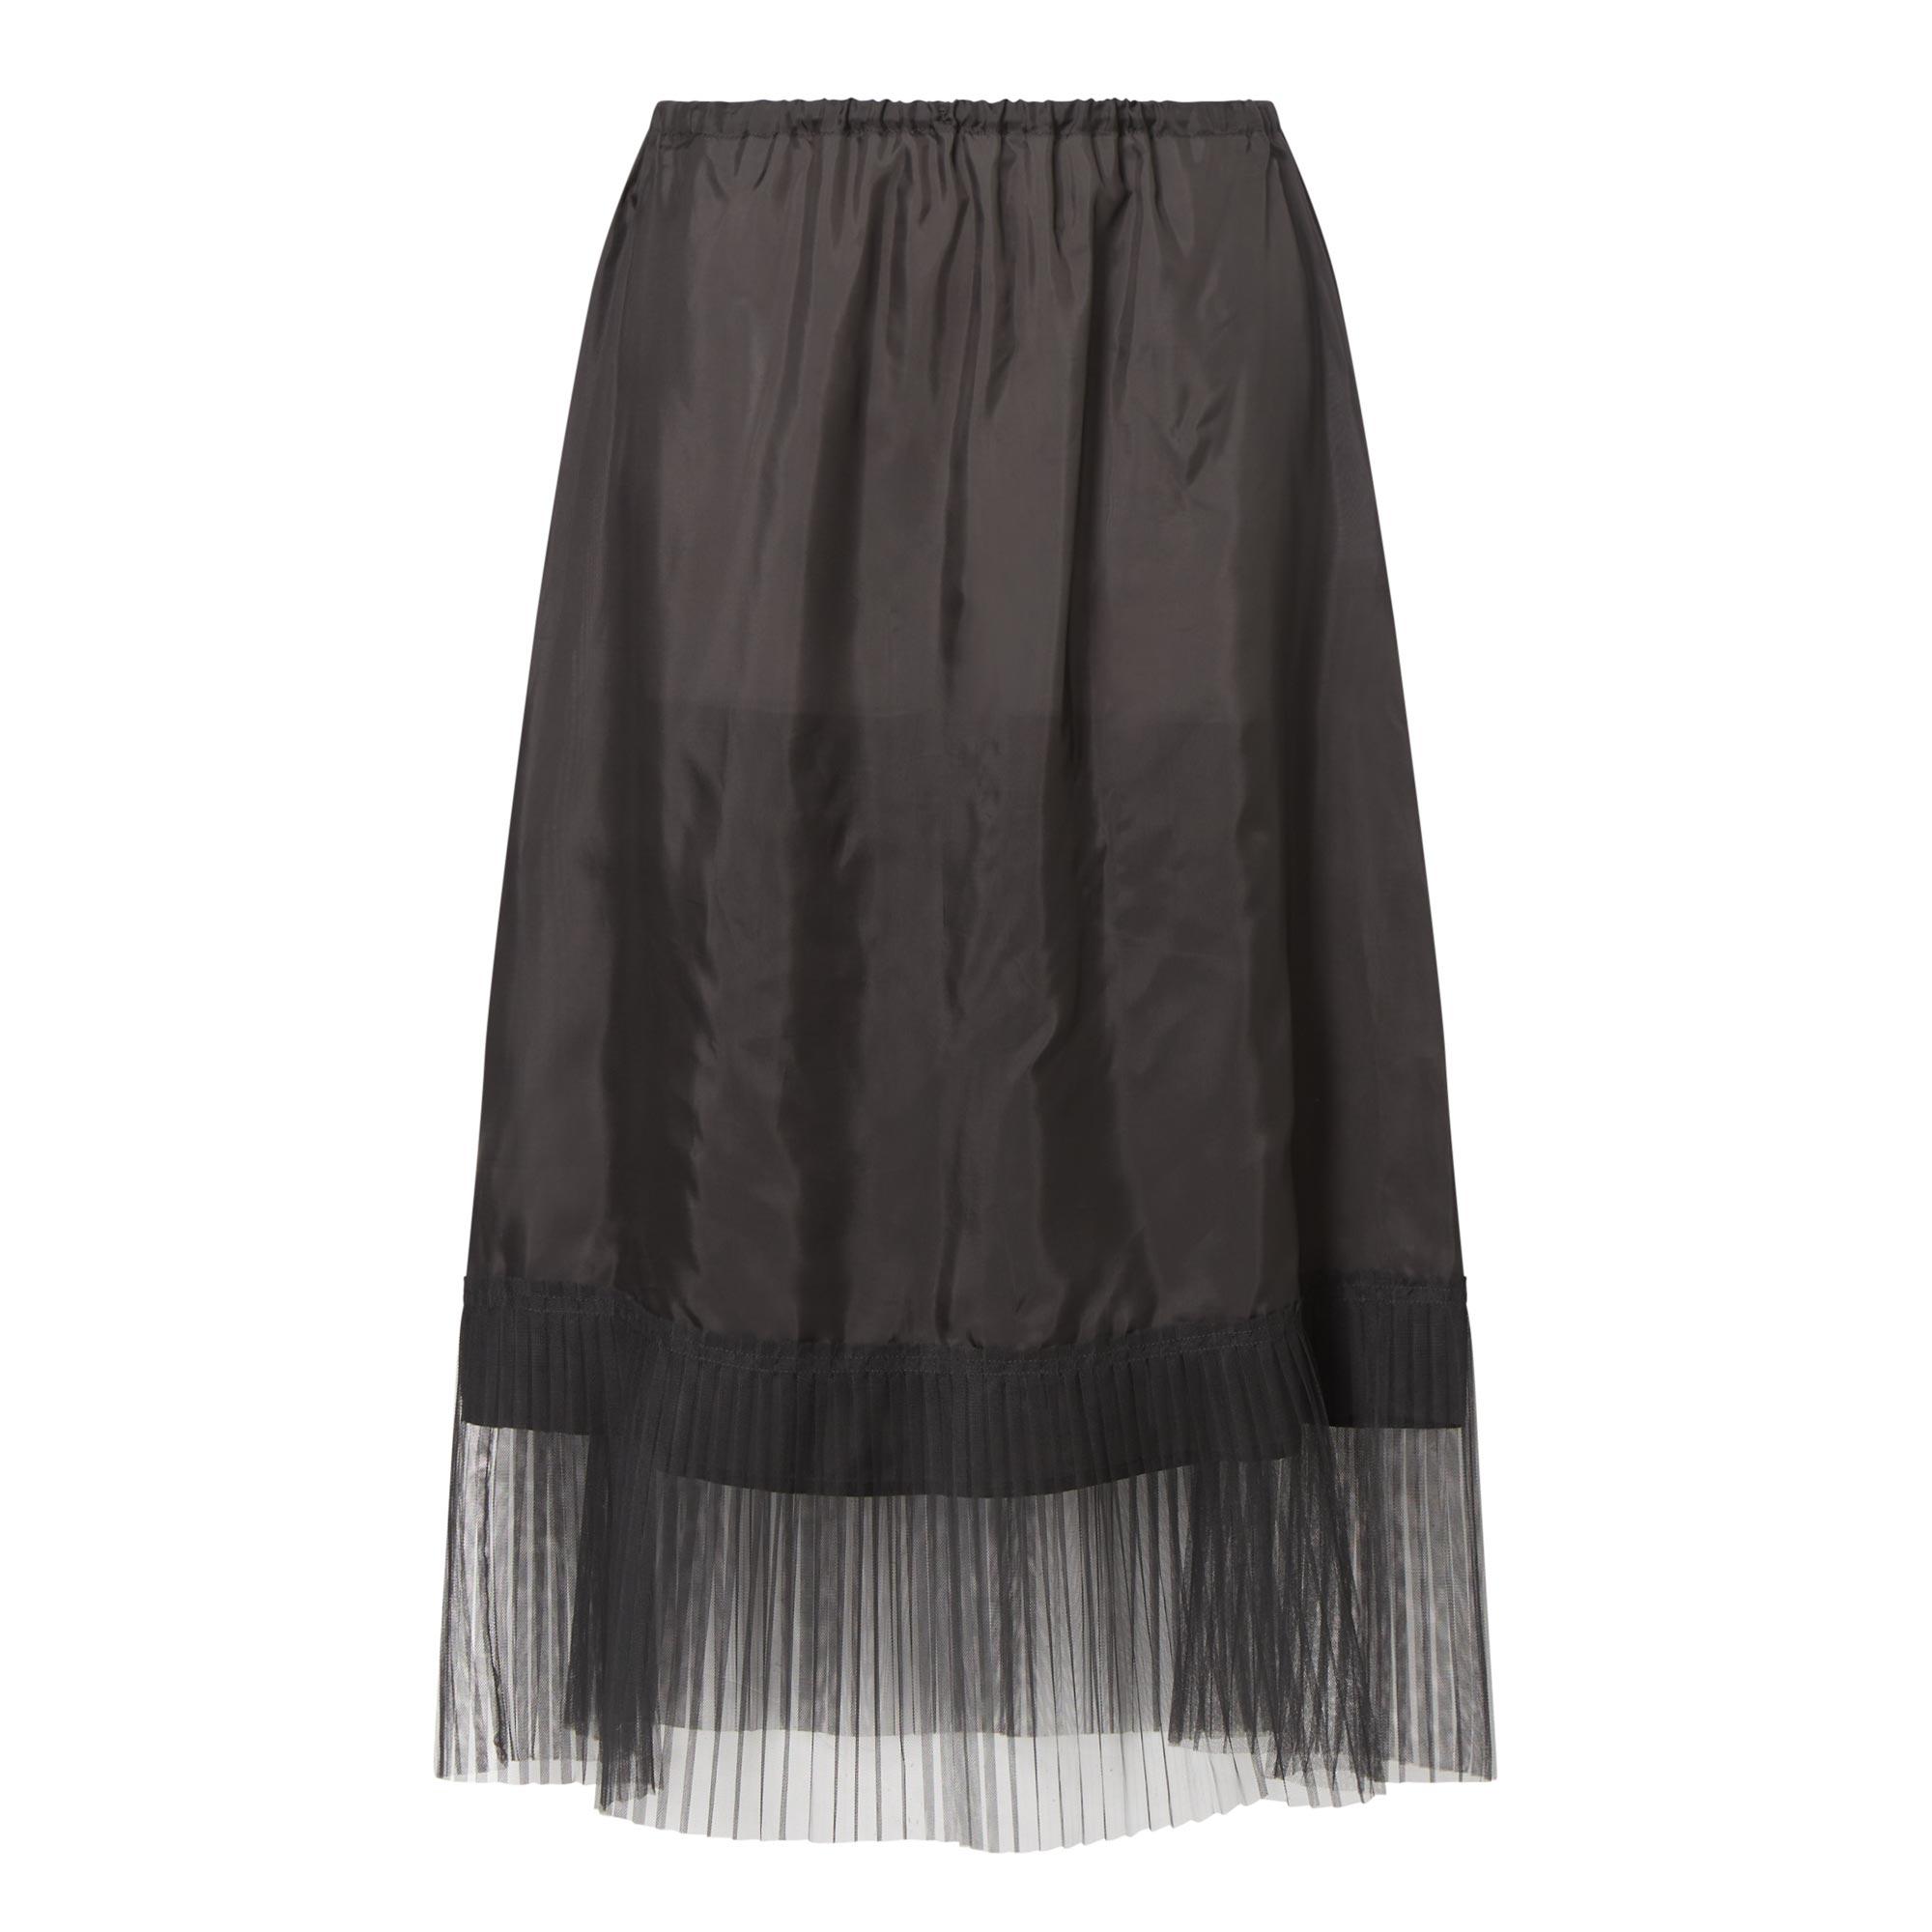 Mova Petticoat Skirt